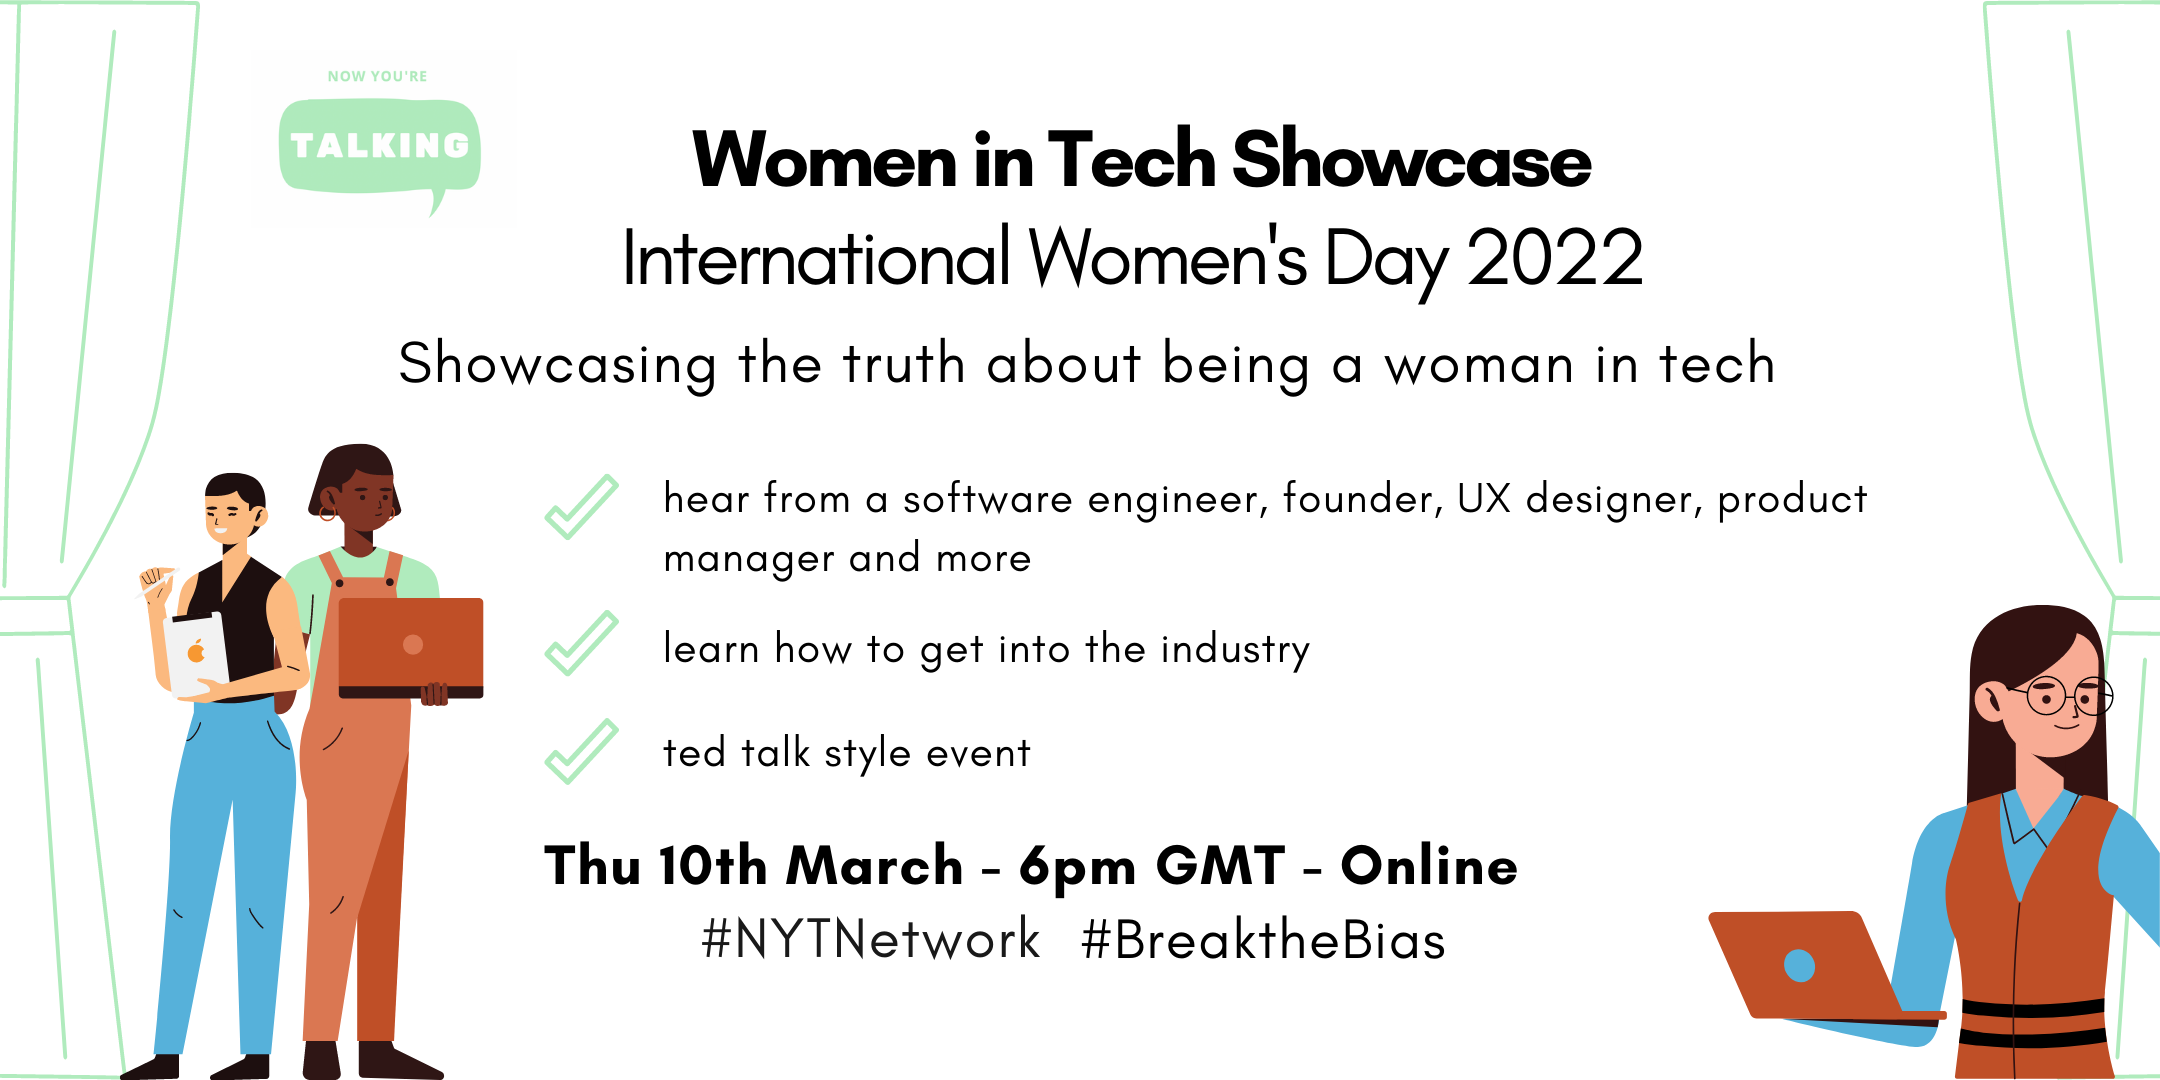 Women in Tech Showcase, Now You're Talking event